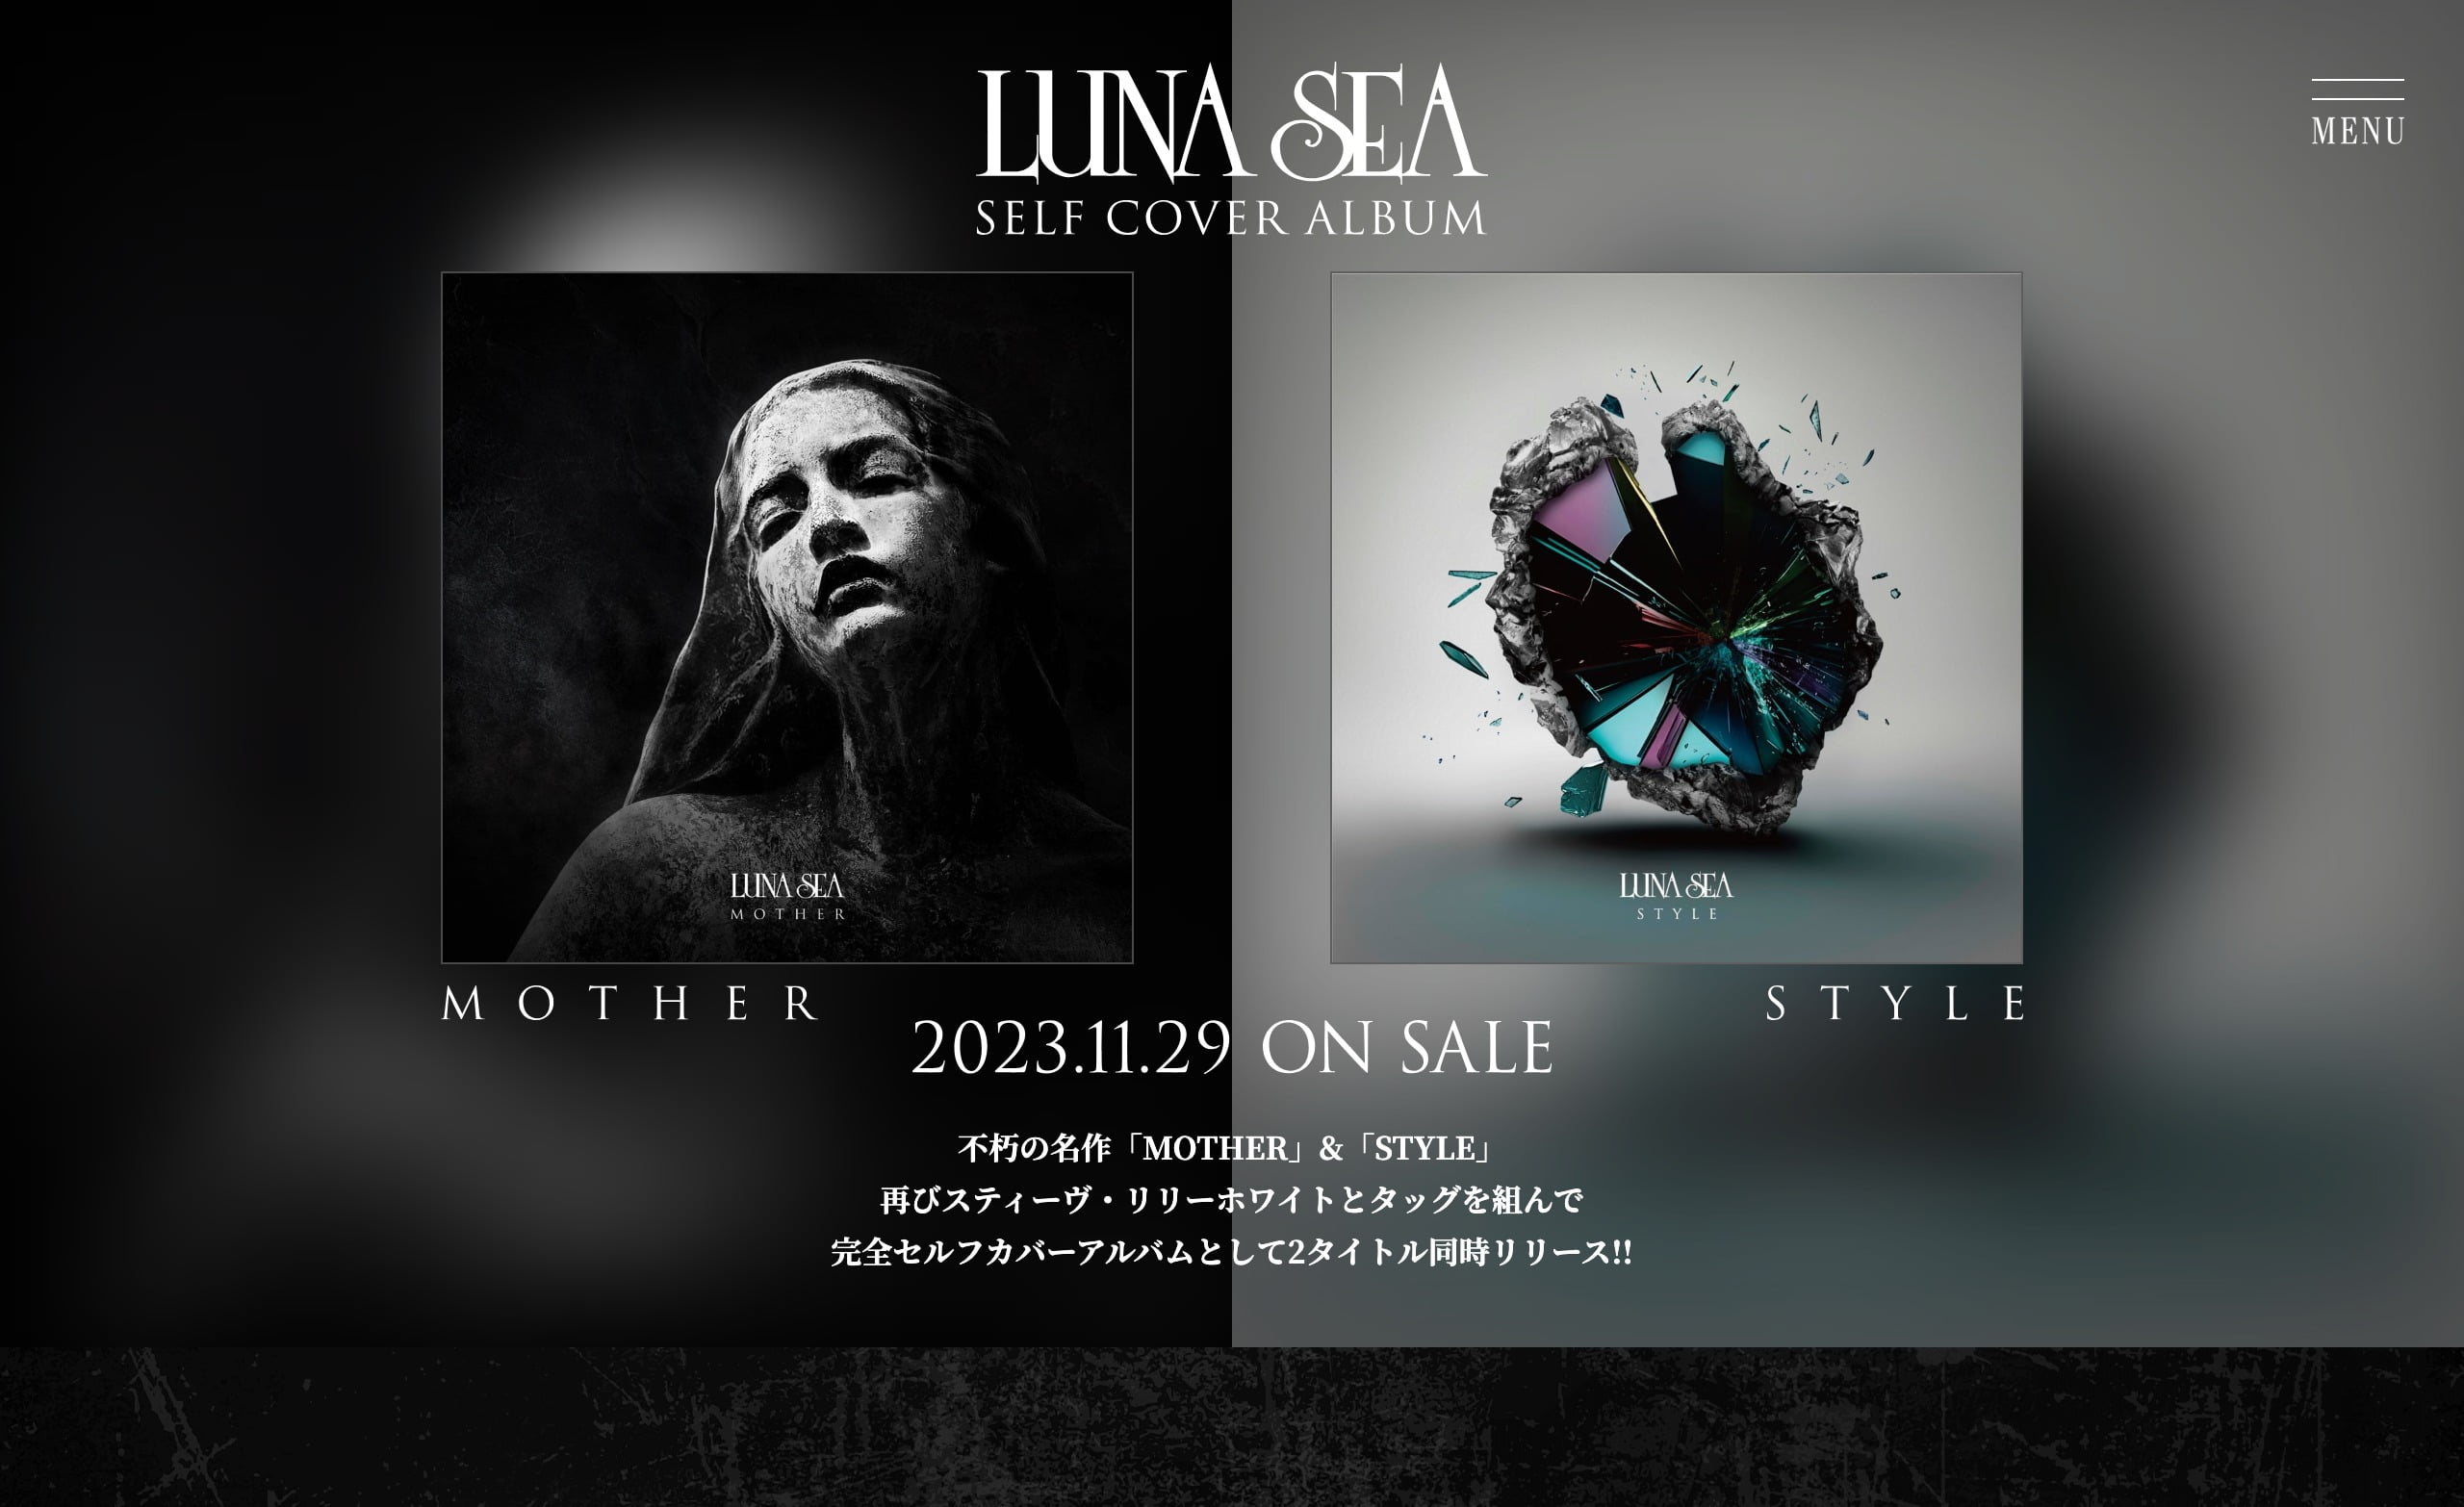 LUNA SEA DUAL SELF COVER ALBUM「MOTHER」&「STYLE」特設サイト 